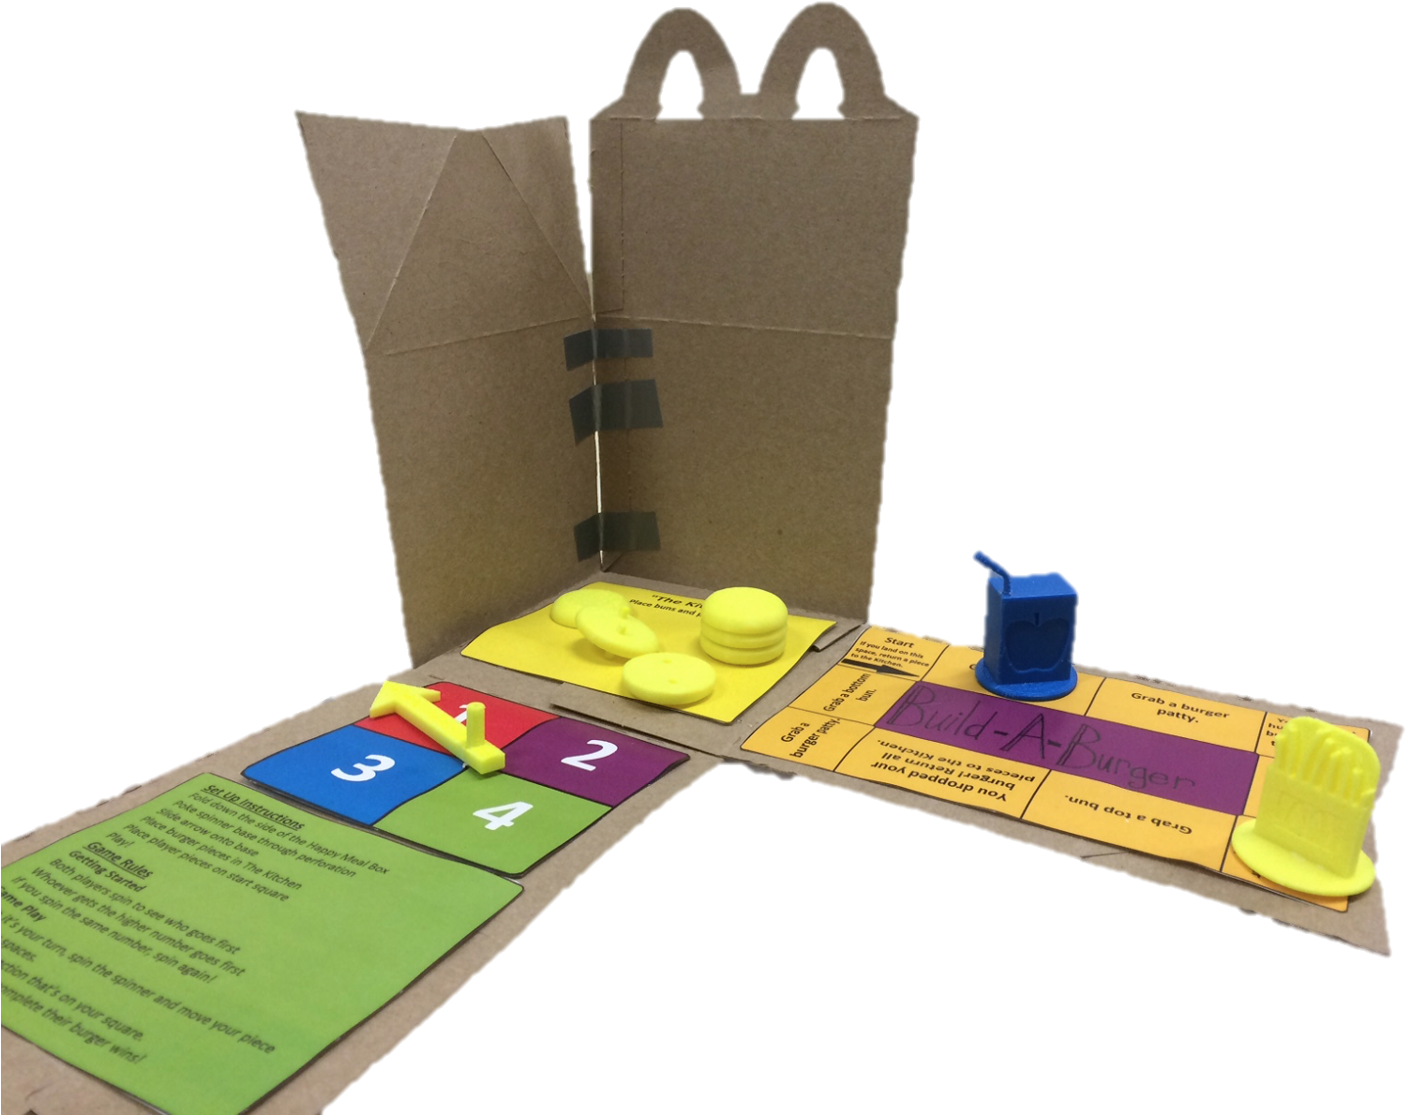 A Cardboard Box With A Game Board